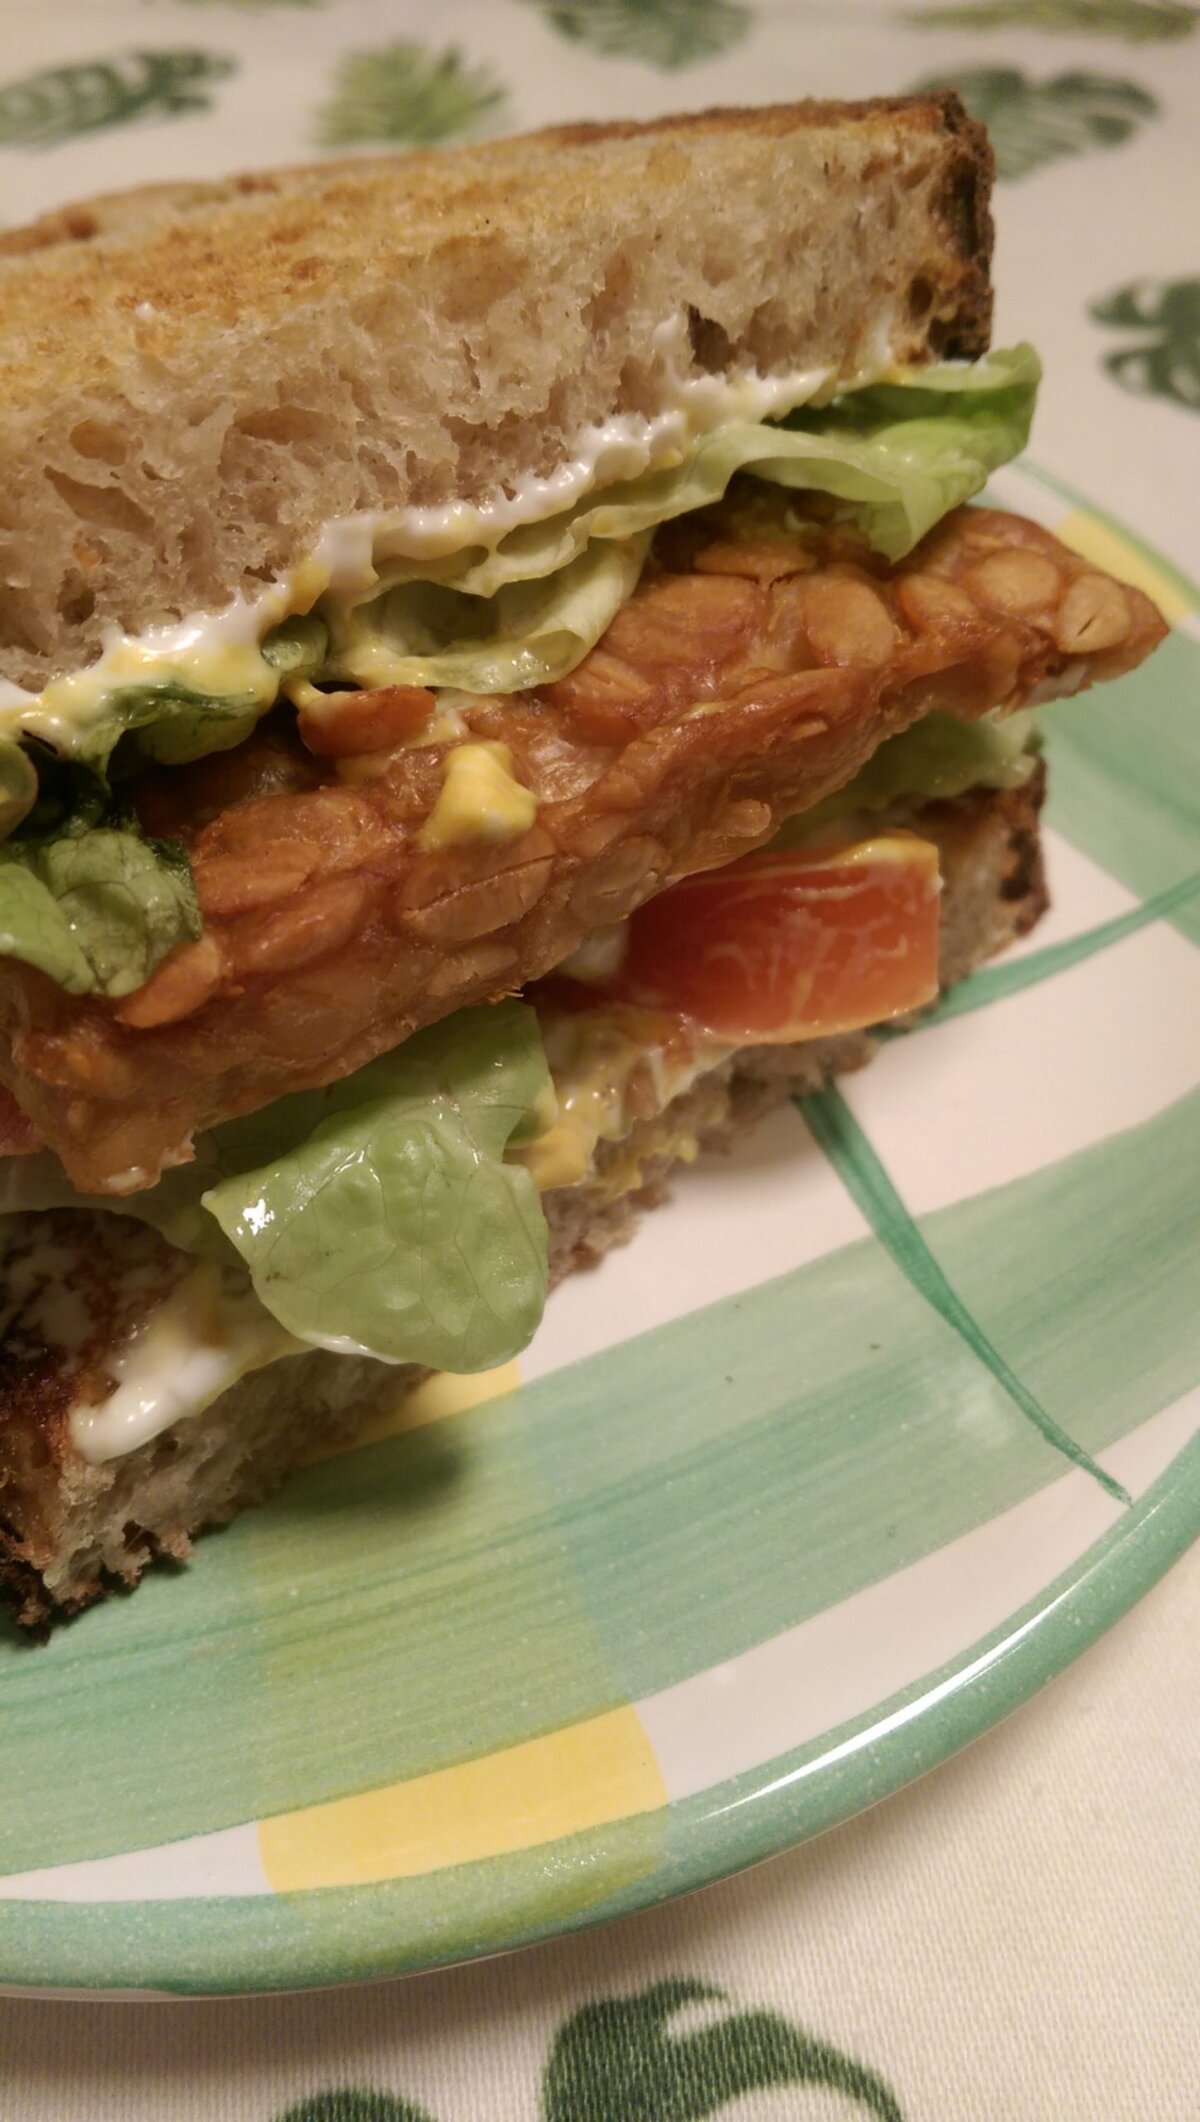 Home-made tempeh sandwich